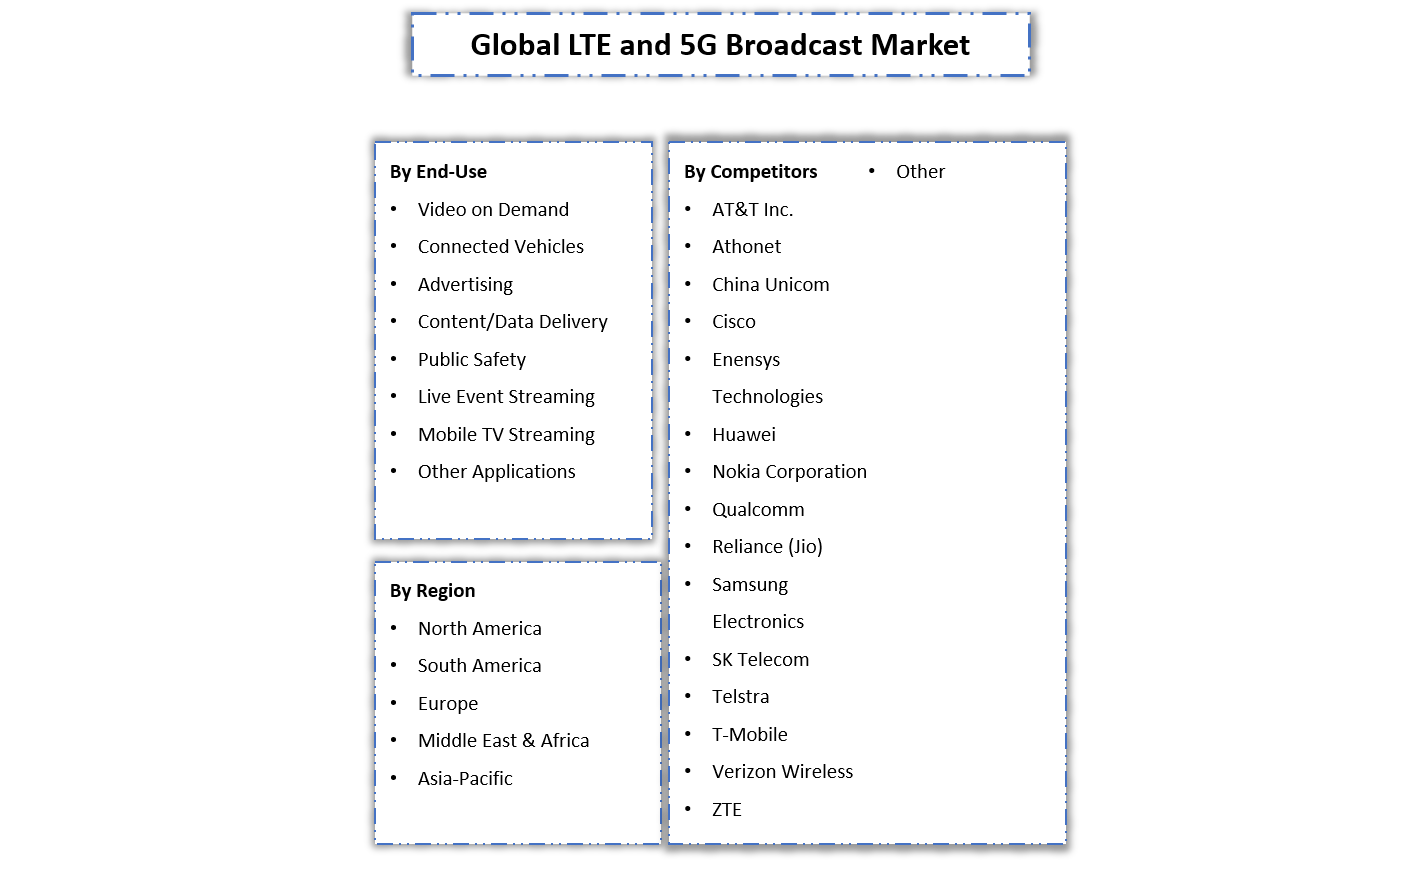 LTE and 5G Broadcast Market  - Segmentation Slide